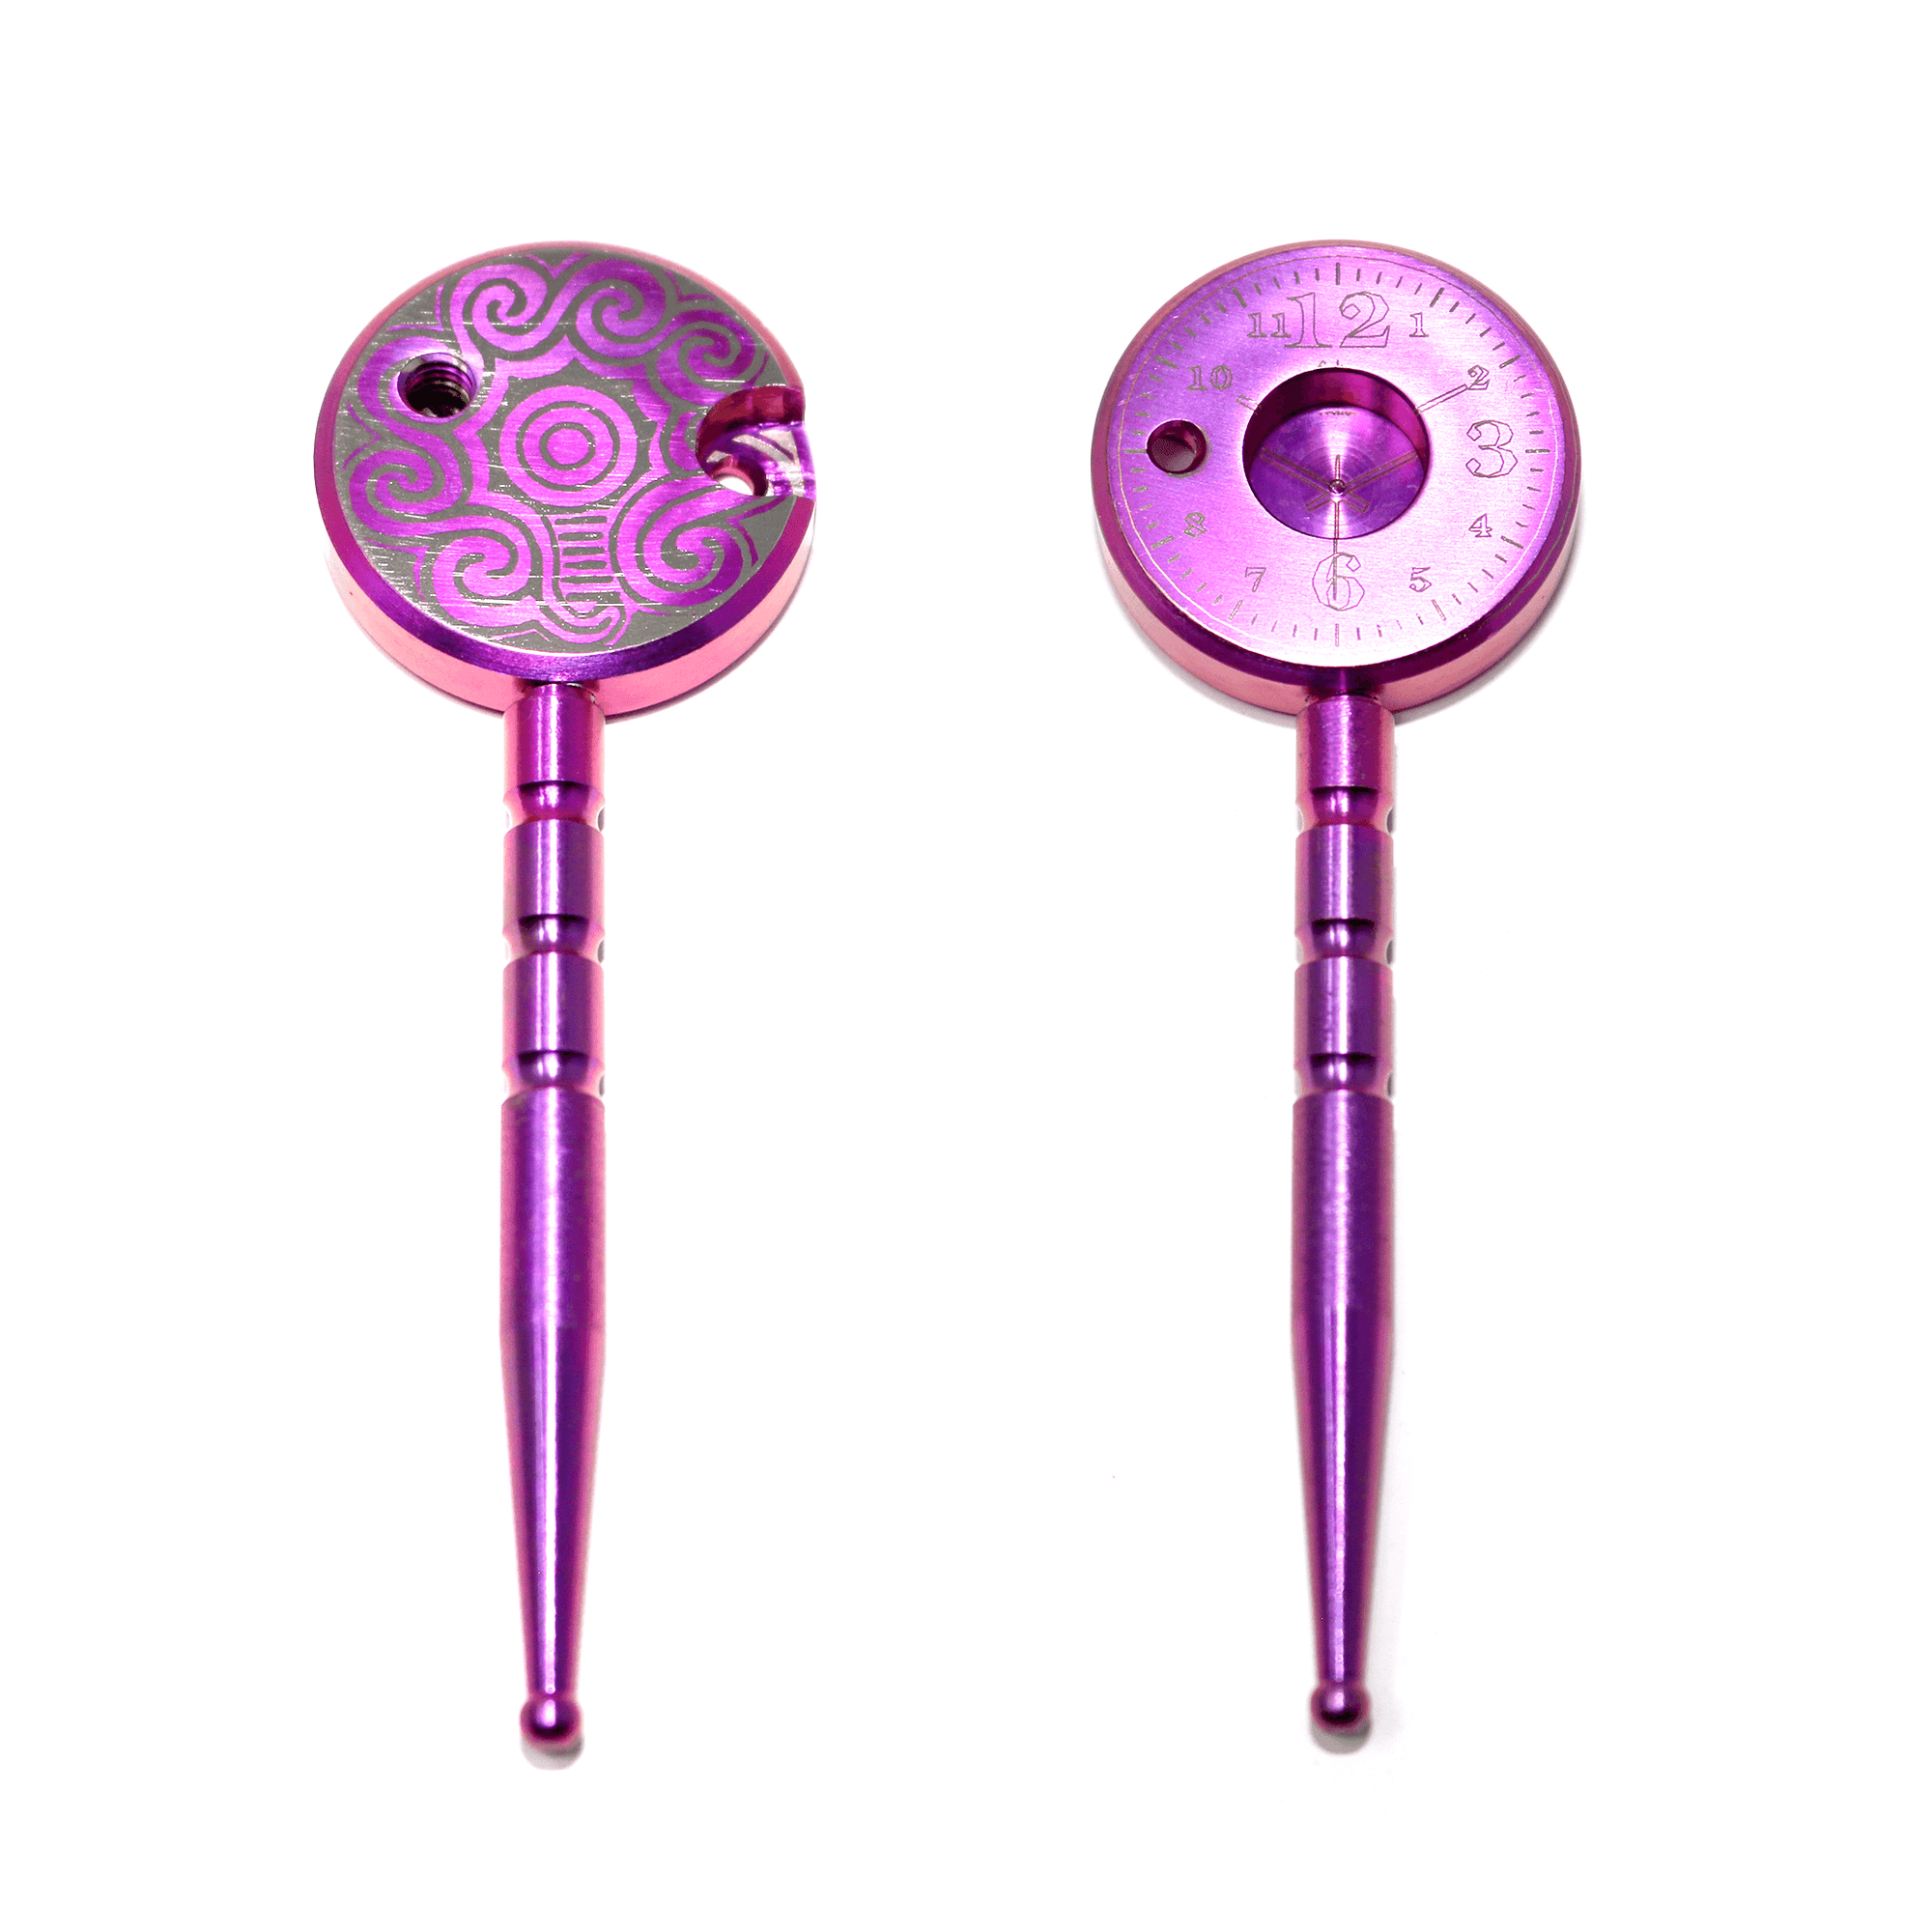 Dab Rig Kit | Portable Showerhead Bubbler & Hybrid Titanium Nail | Lollipop Dab Cap Tool View | TDS